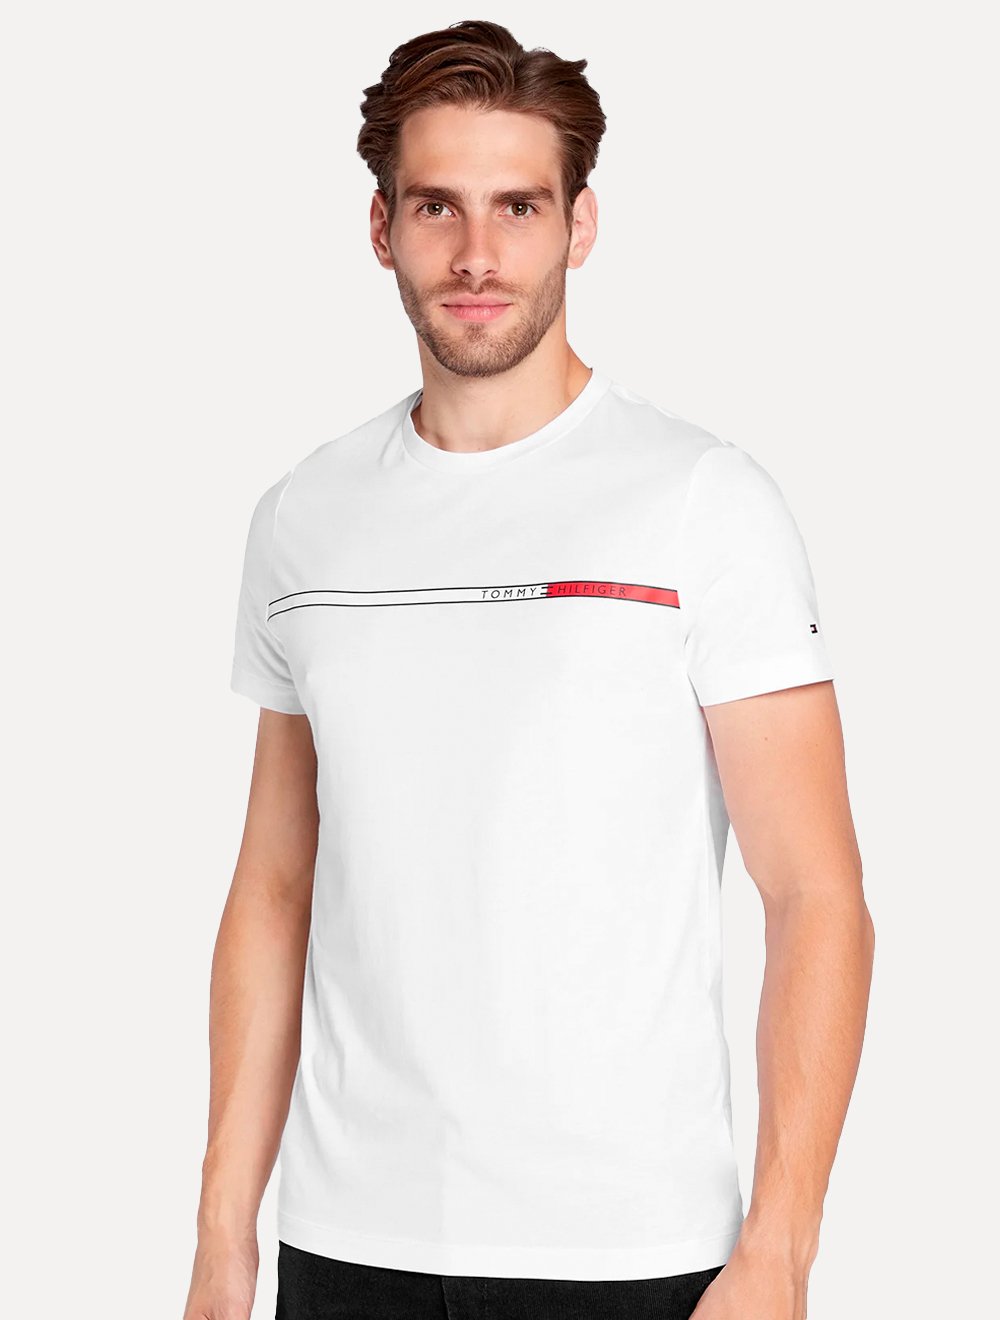 Tommy Hilfiger T-shirt com o logotipo do núcleo branco - Esdemarca